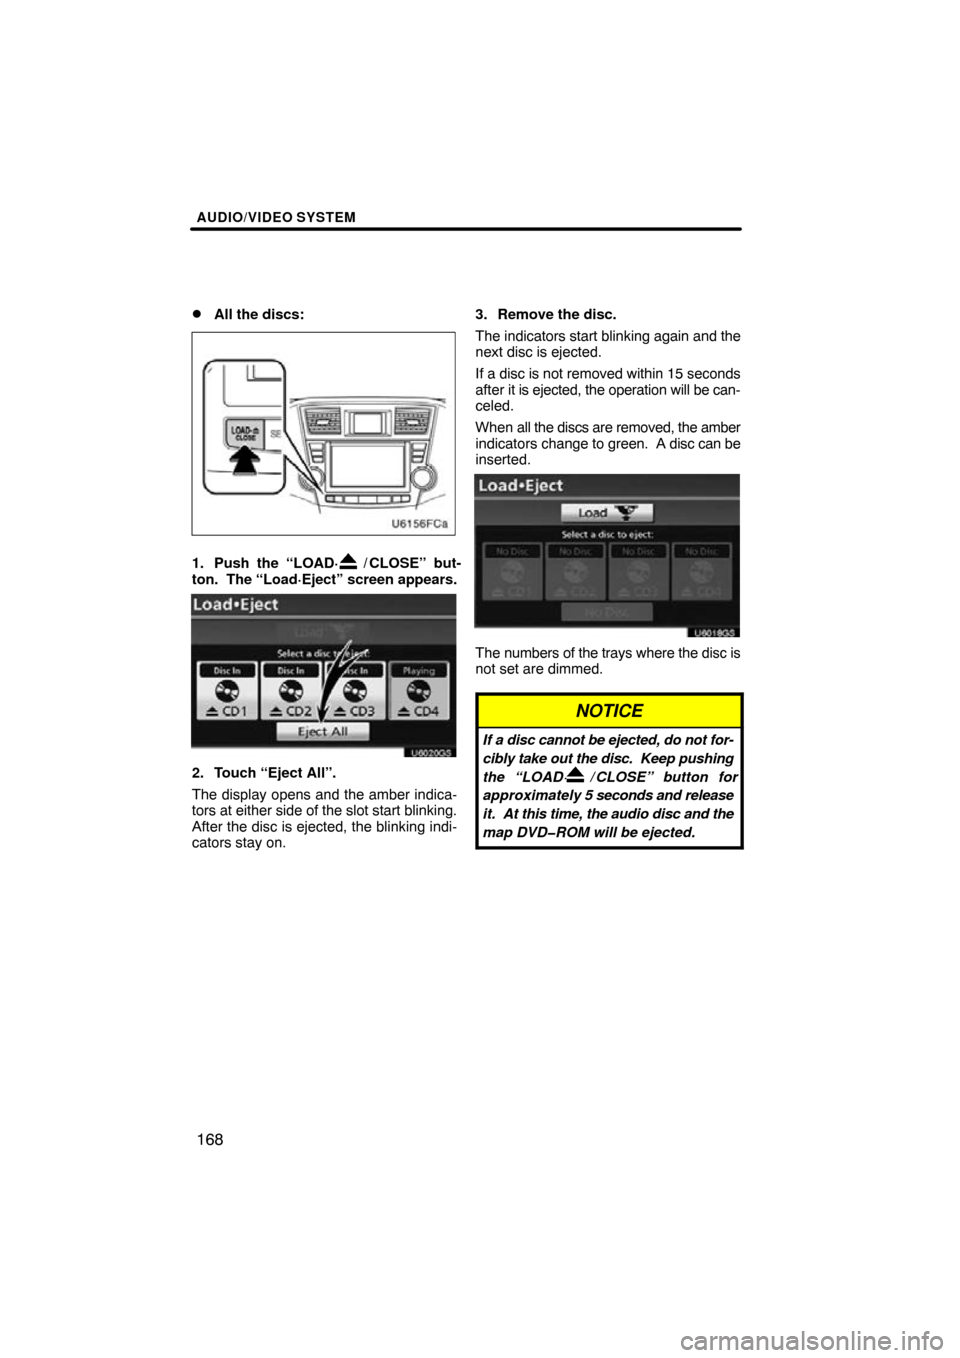 TOYOTA HIGHLANDER 2013 XU50 / 3.G Navigation Manual AUDIO/VIDEO SYSTEM
168

All the discs:
1. Push the “LOAD·/ CLOSE” but-
ton.  The “Load·Eject” screen appears.
U6020GS
2. Touch “Eject All”.
The display opens and the amber indica-
tors 